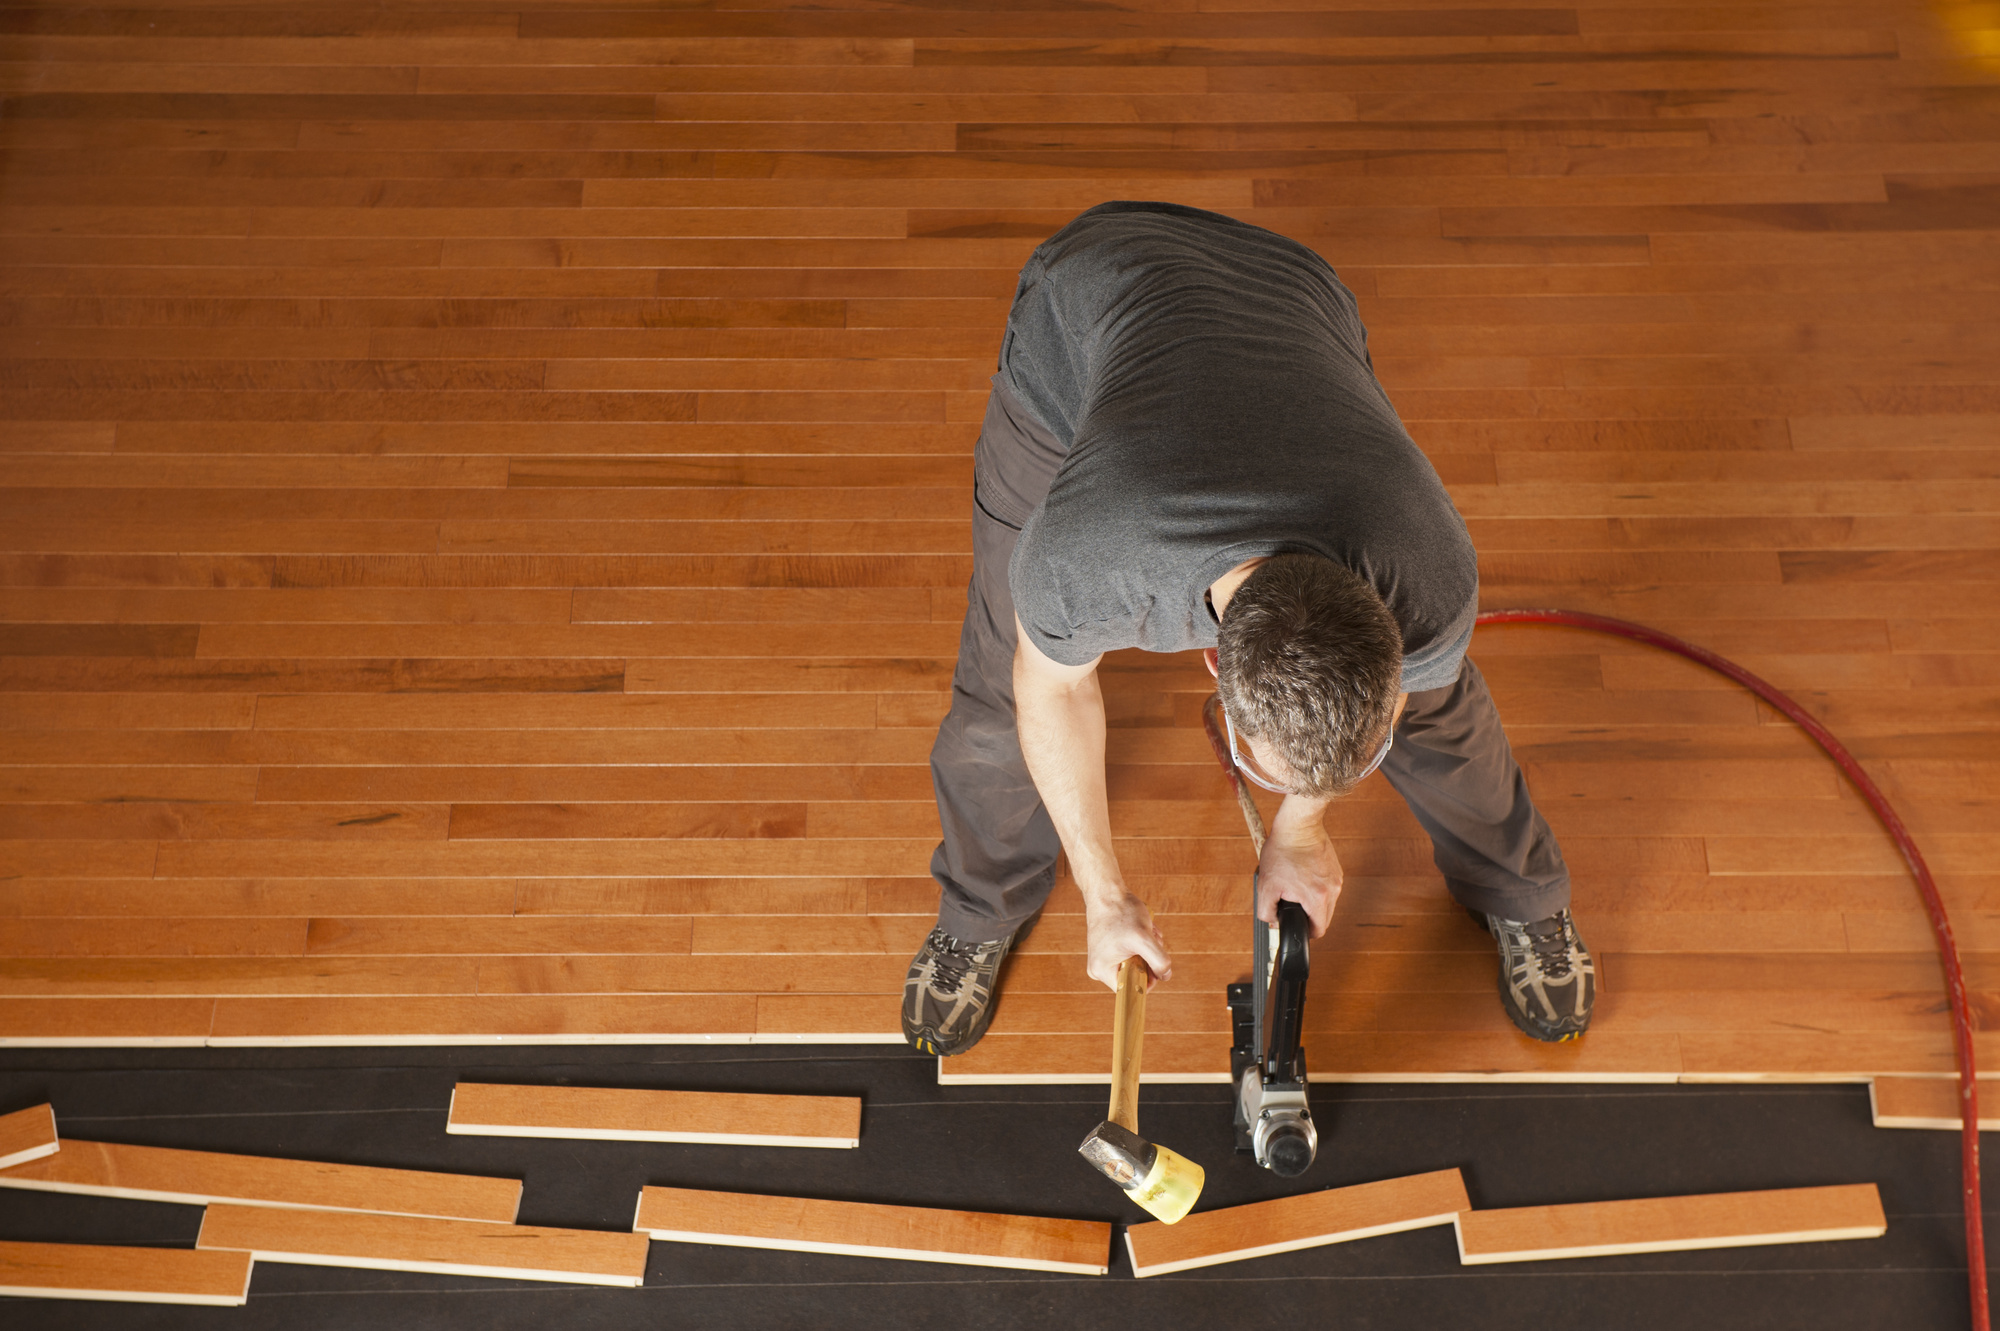 Hardwood Flooring Cost To Install, Labor Cost To Install Engineered Hardwood Flooring